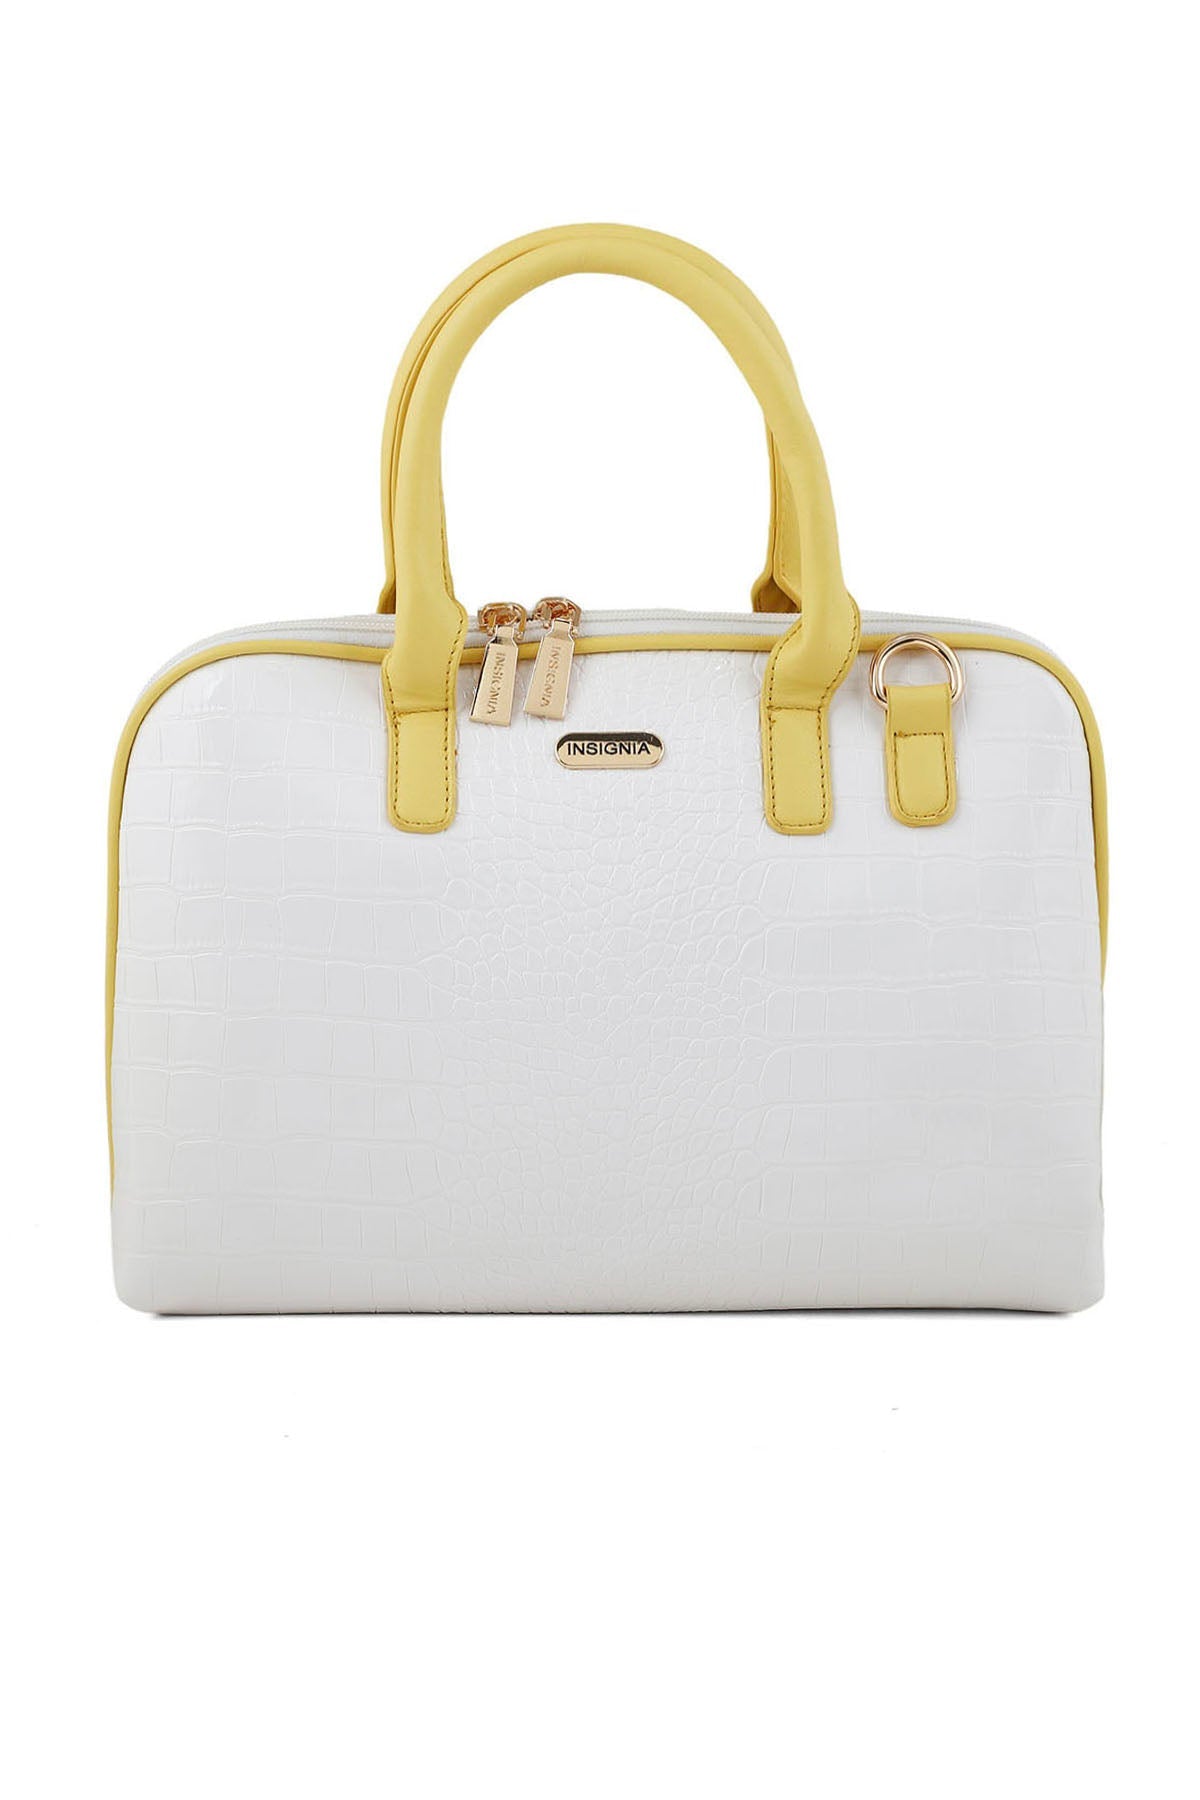 Top Handle Hand Bags B15046-Yellow